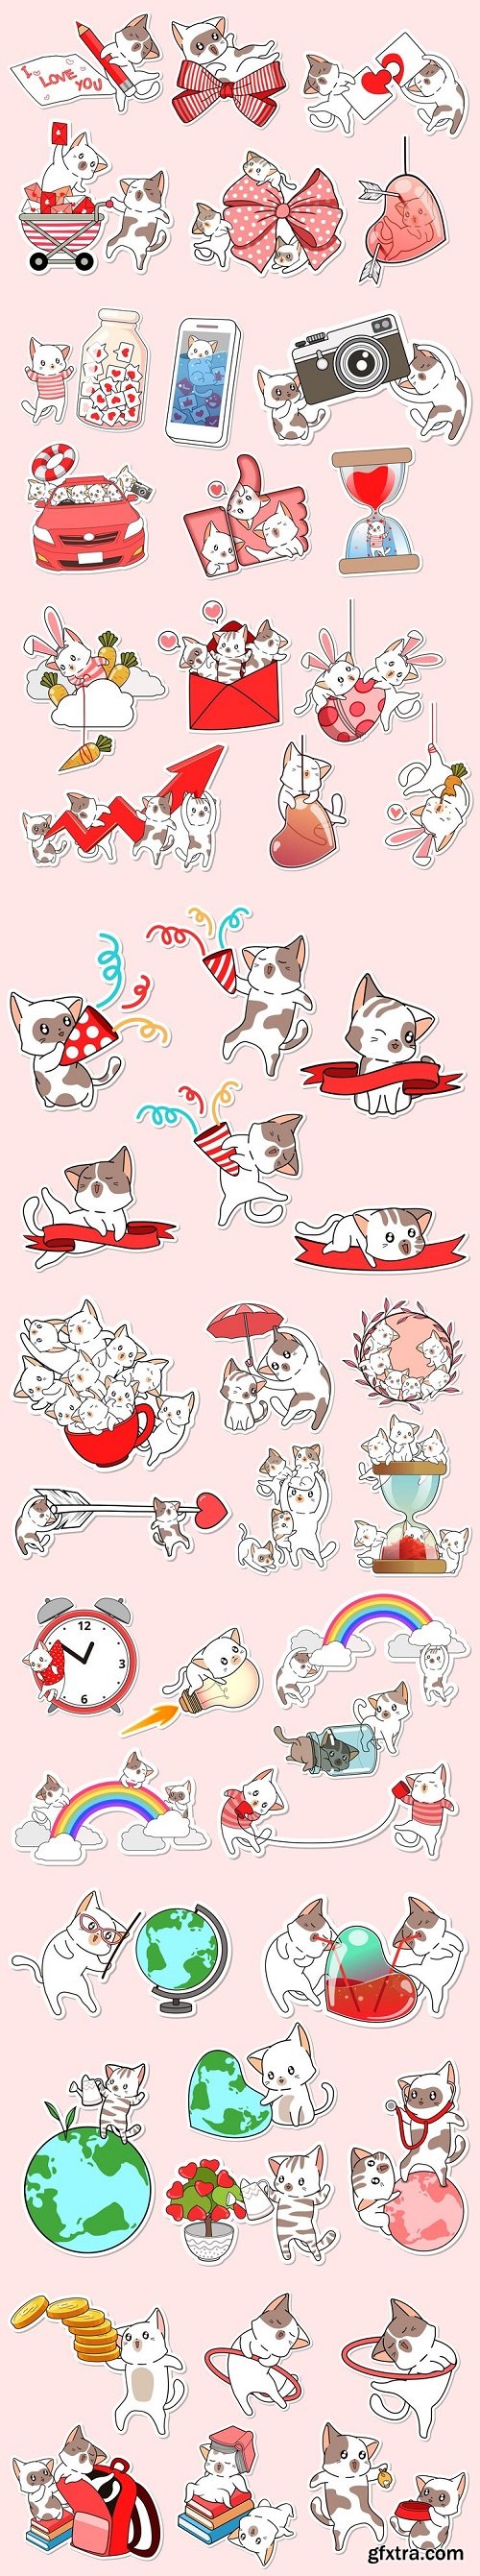 Cute cat cartoon sticker collection